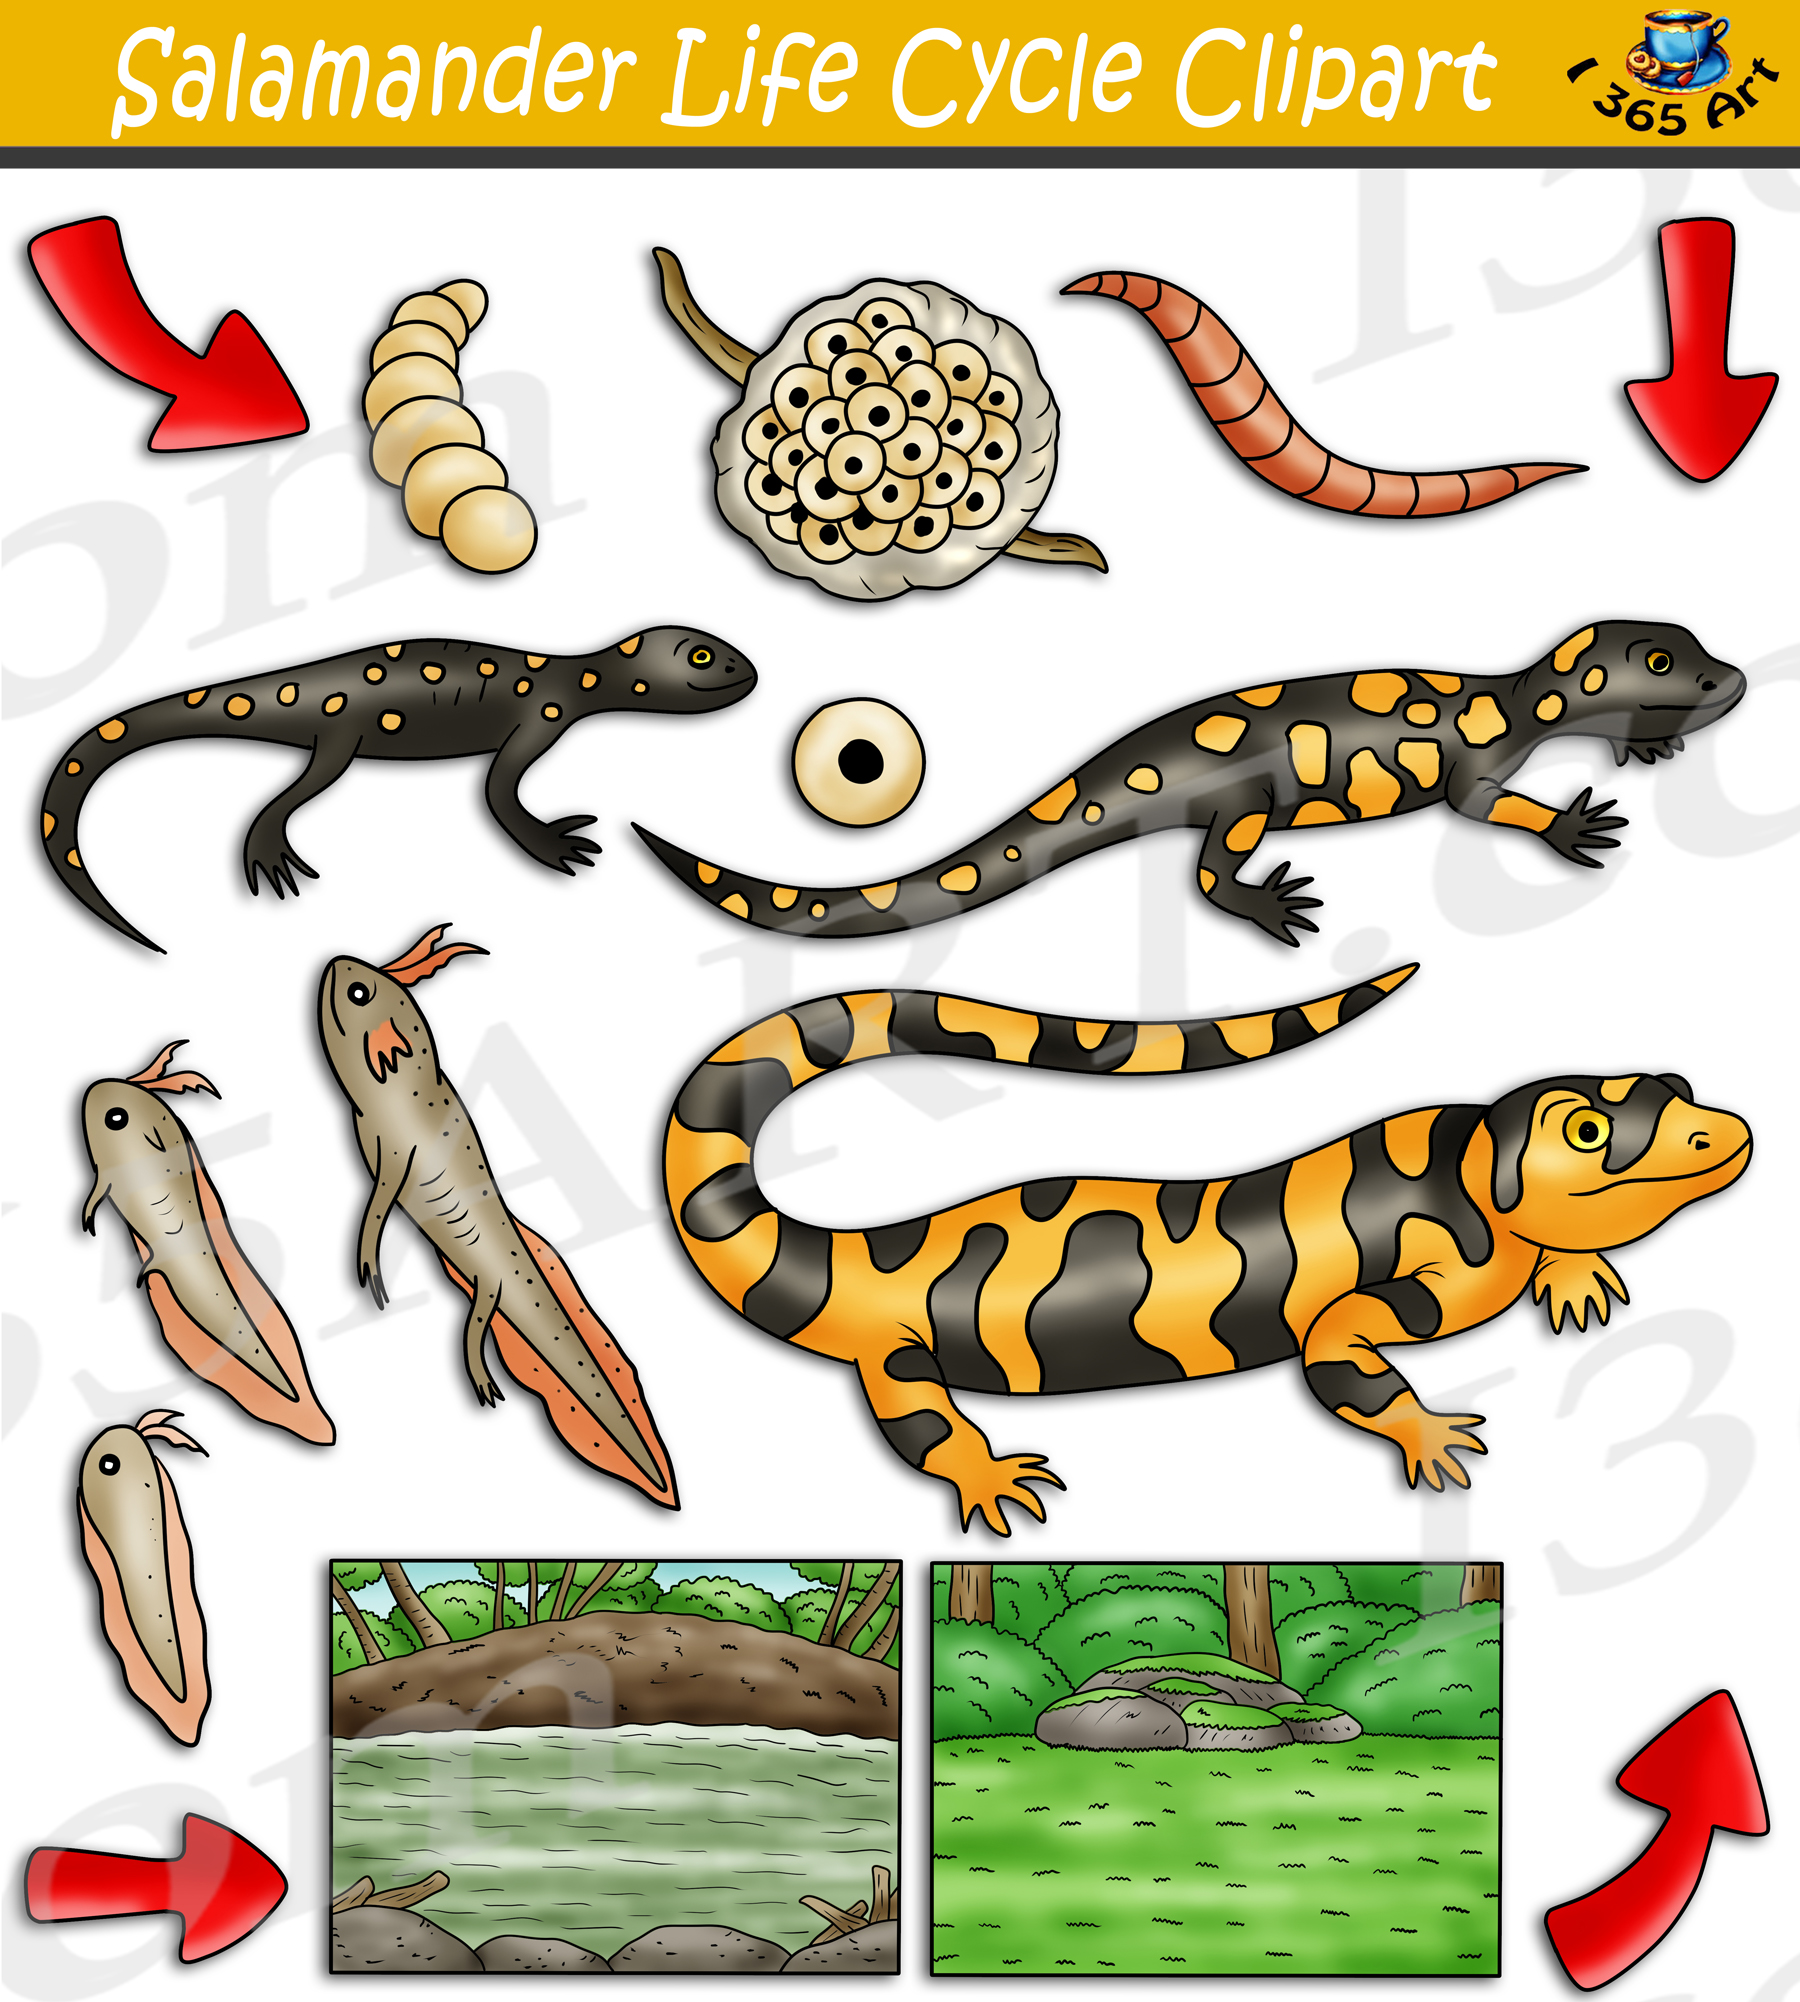 lizard life cycle